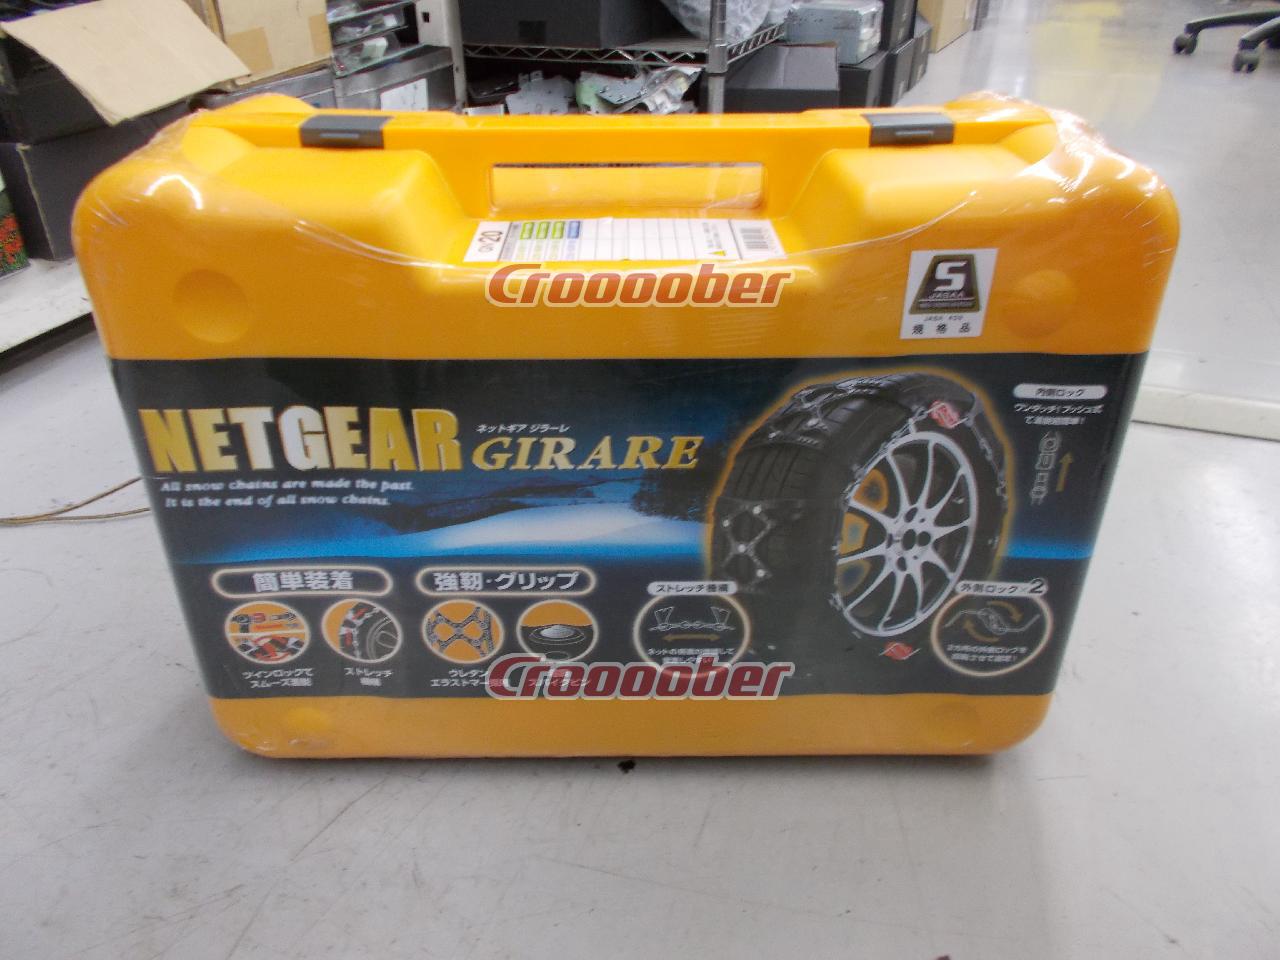 KEIKA NETGEAR GIRARE(ネットギア ジラーレ) GN20 | タイヤホイール関連 チェーンパーツの通販なら |  Croooober(クルーバー)